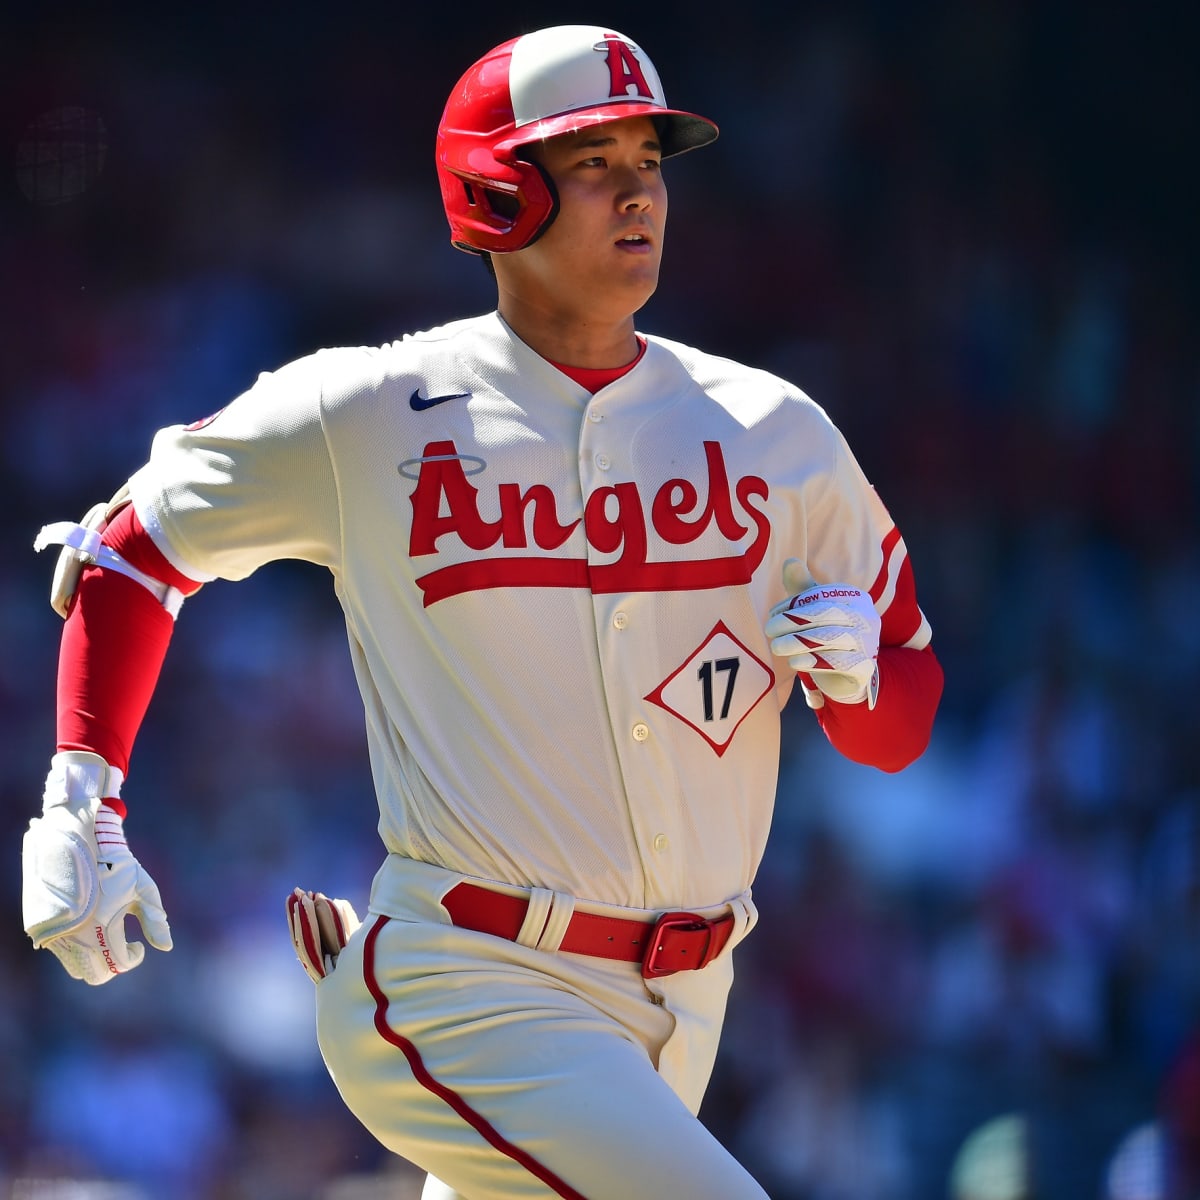 Angels' Shohei Ohtani is No. 1 among MLB prospects: survey - The Japan Times